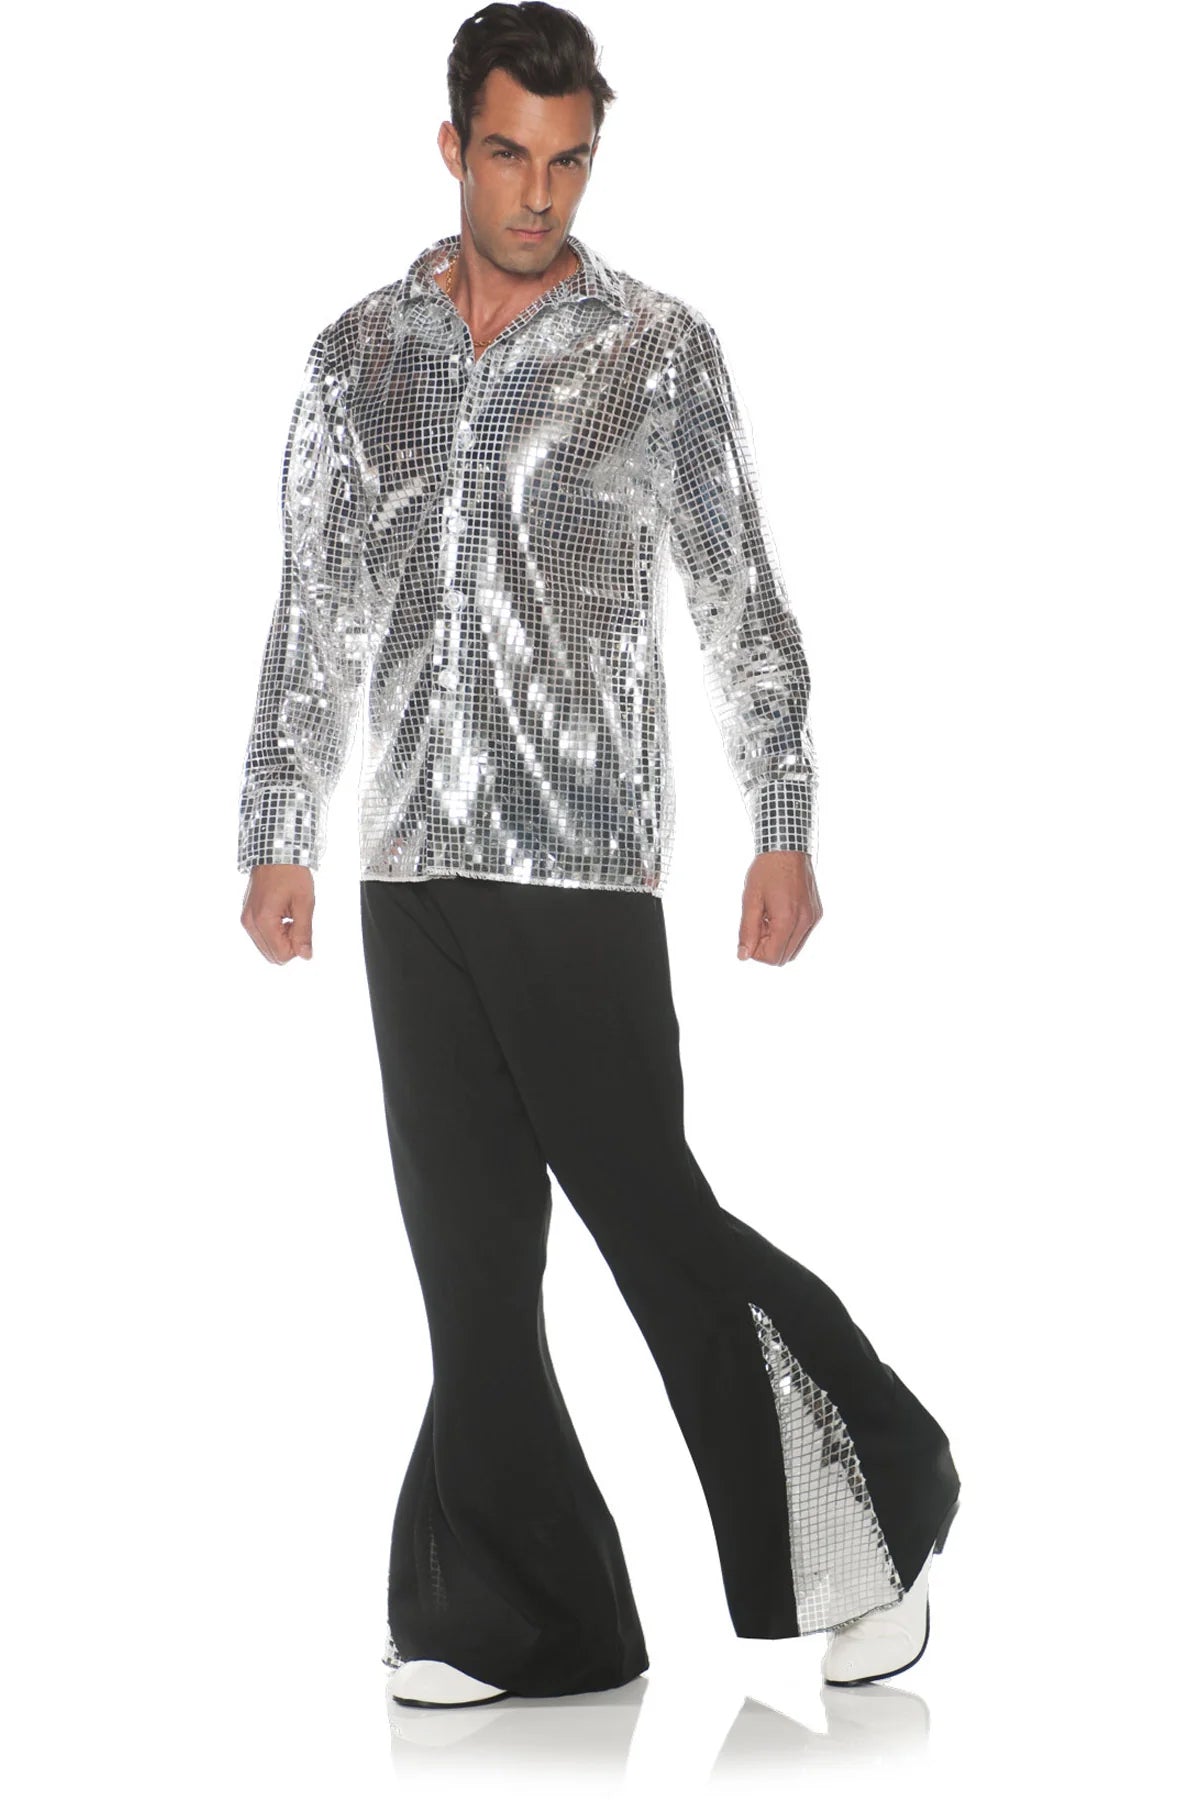 Disco Fever Costume